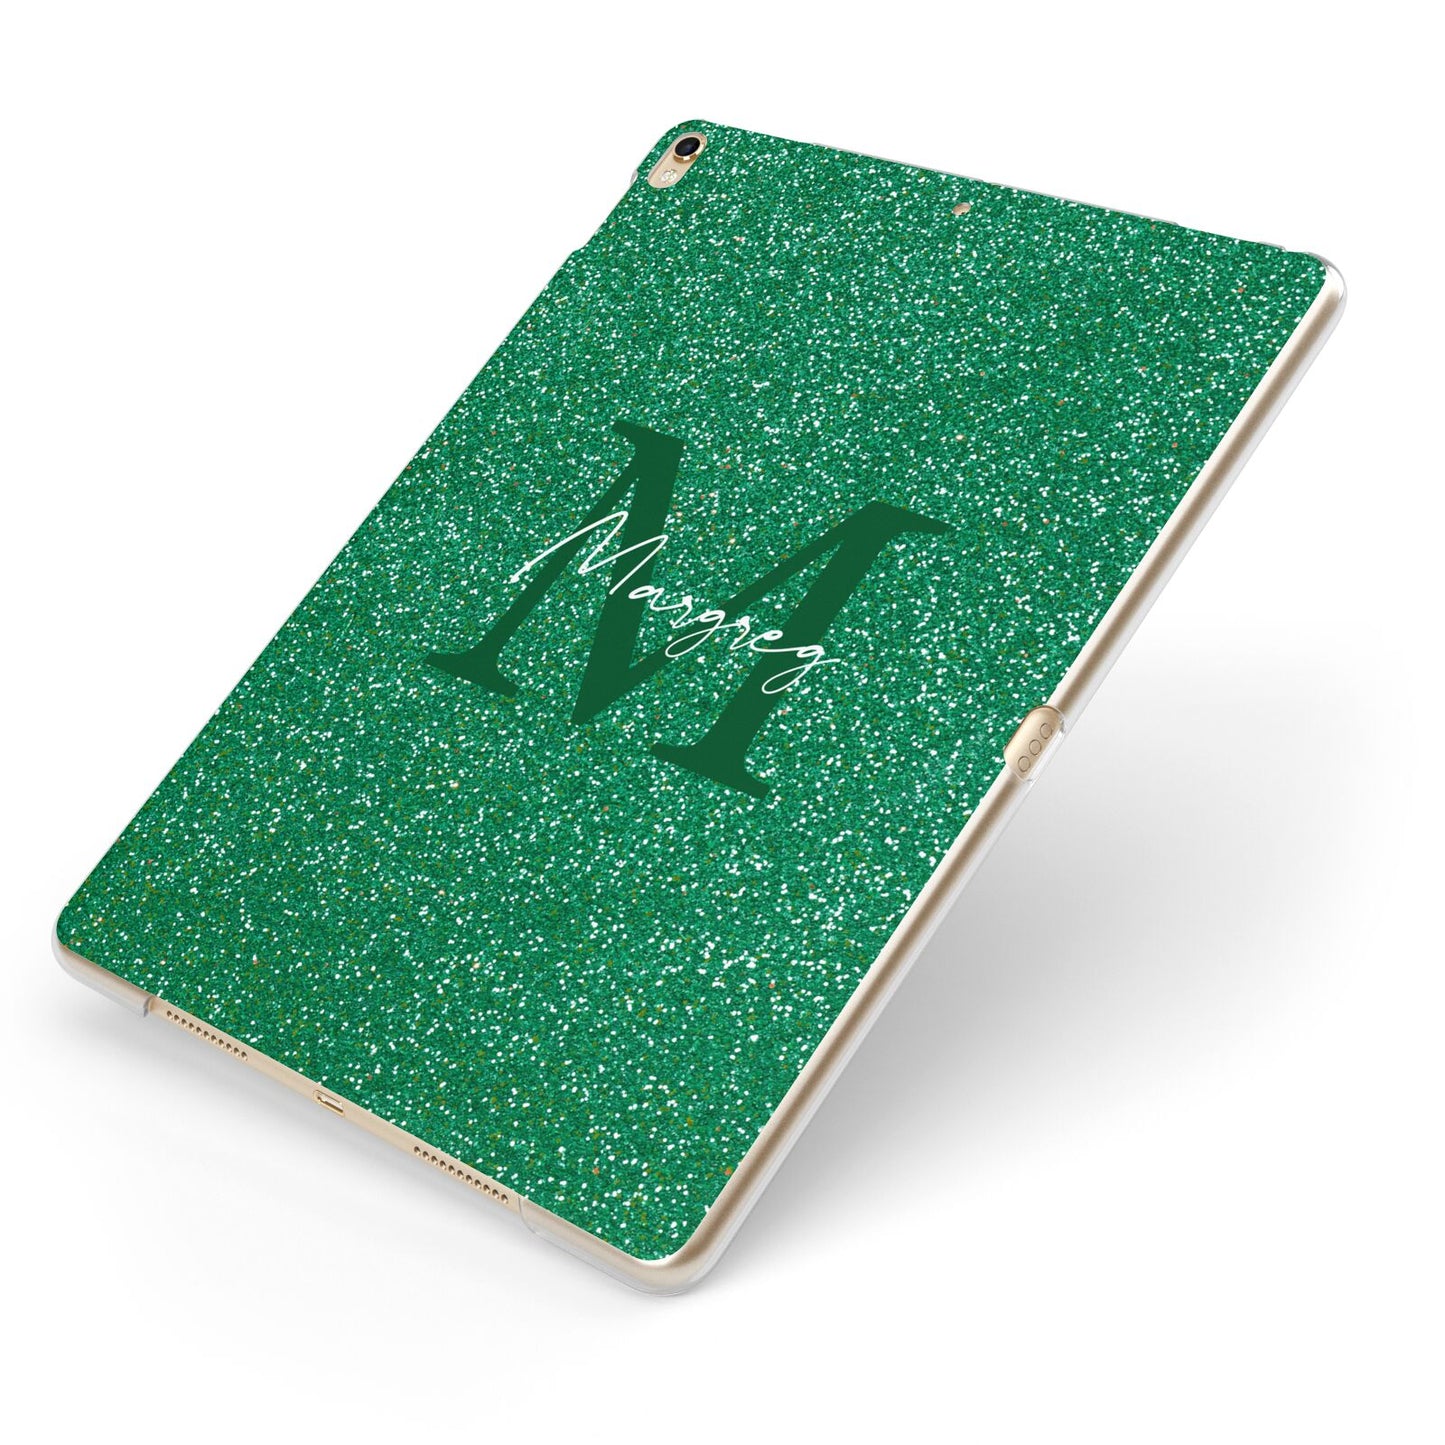 Green Monogram Apple iPad Case on Gold iPad Side View